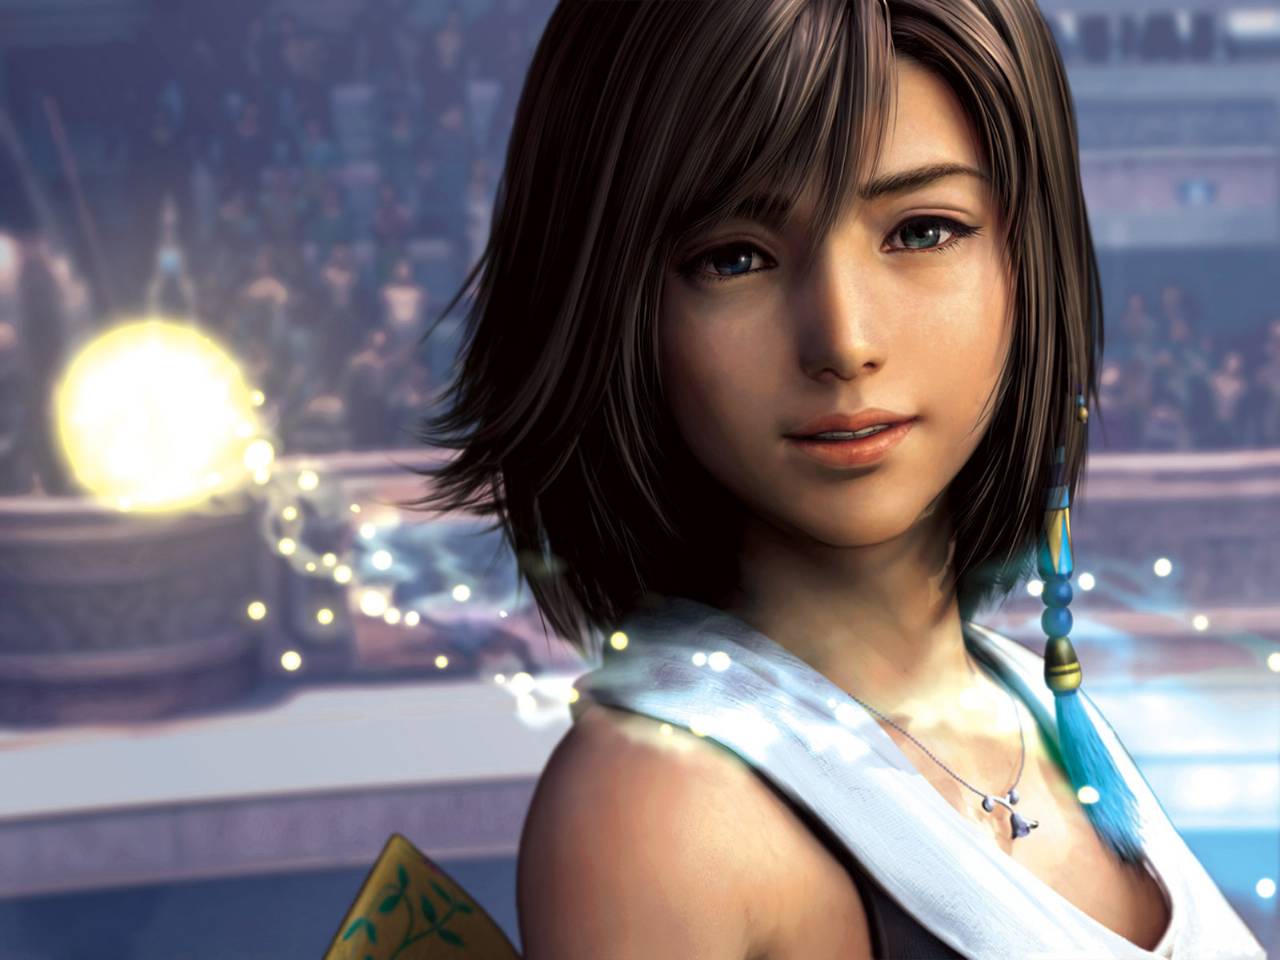 Inside Final Fantasy: scopriamo Final Fantasy X/X-2 HD Remaster